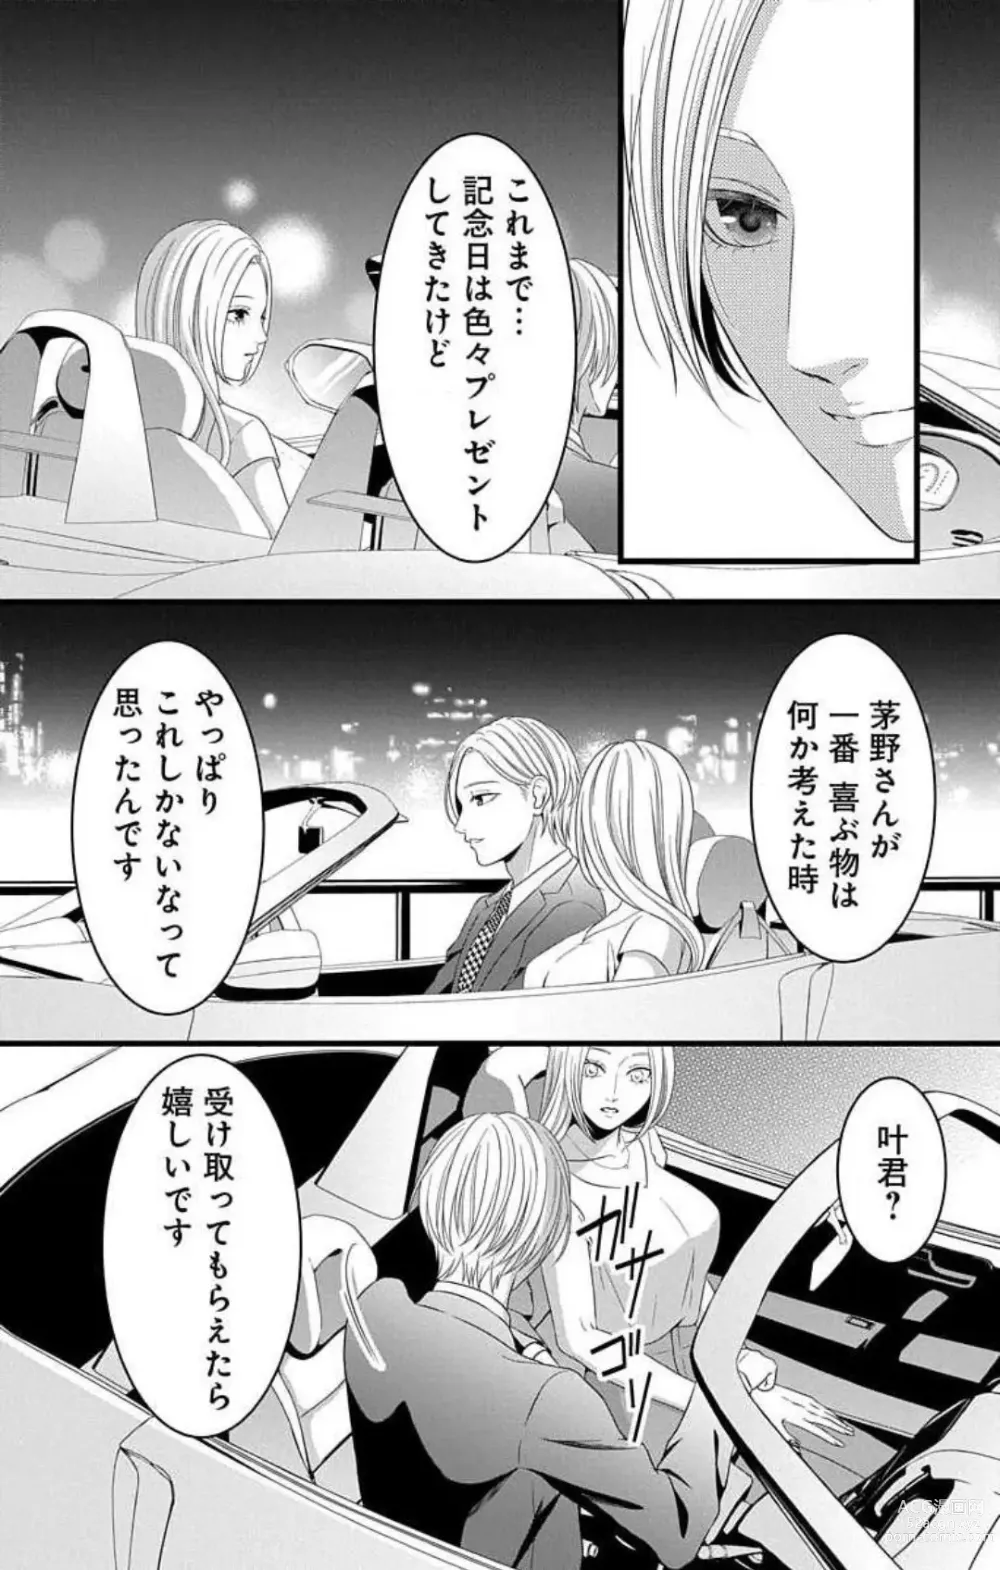 Page 259 of manga Mousou Shoujo 21-27